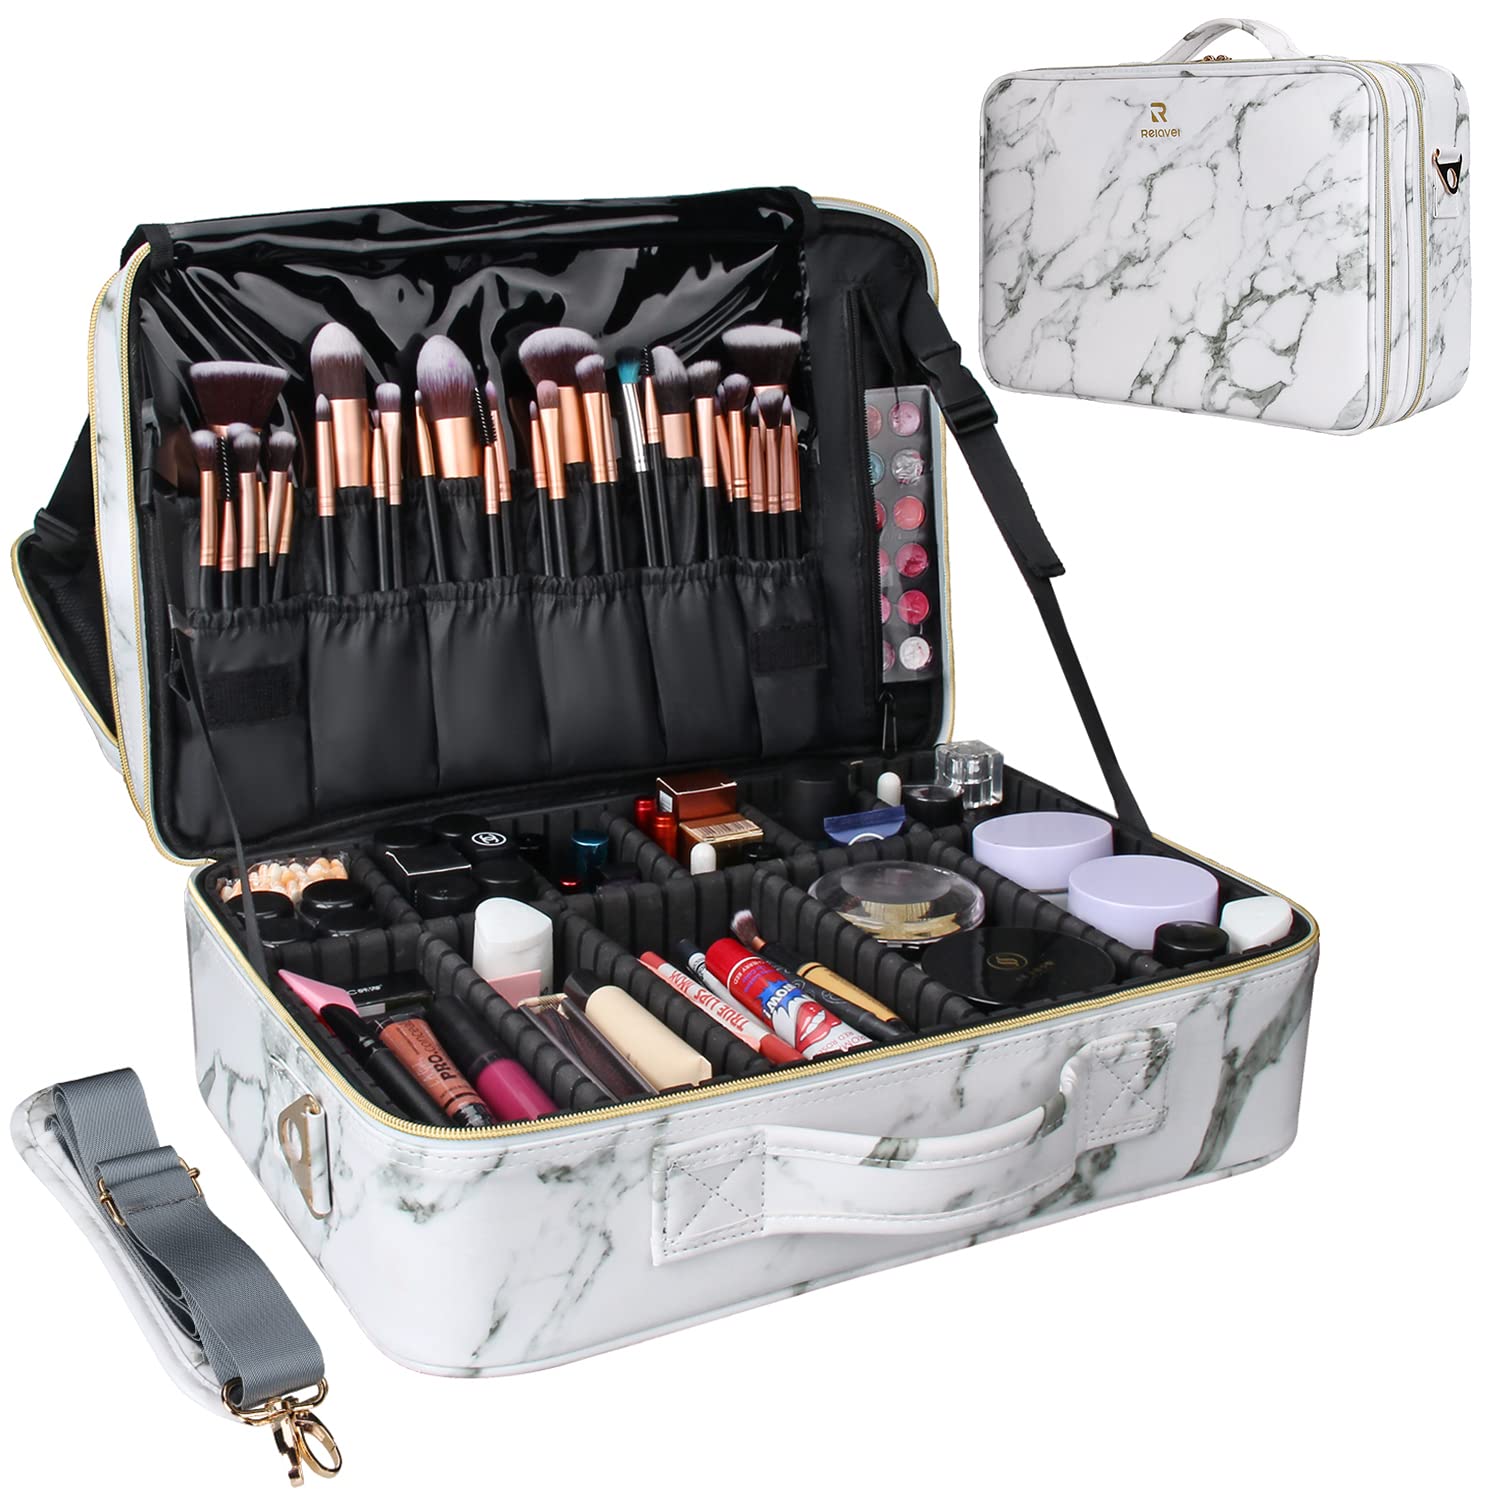 Relavel Makeup Case Large Makeup Bag Professional Train Case 16.5 inches Travel Cosmetic Organizer Brush Holder Waterproof Makeup Artist Storage Bo...